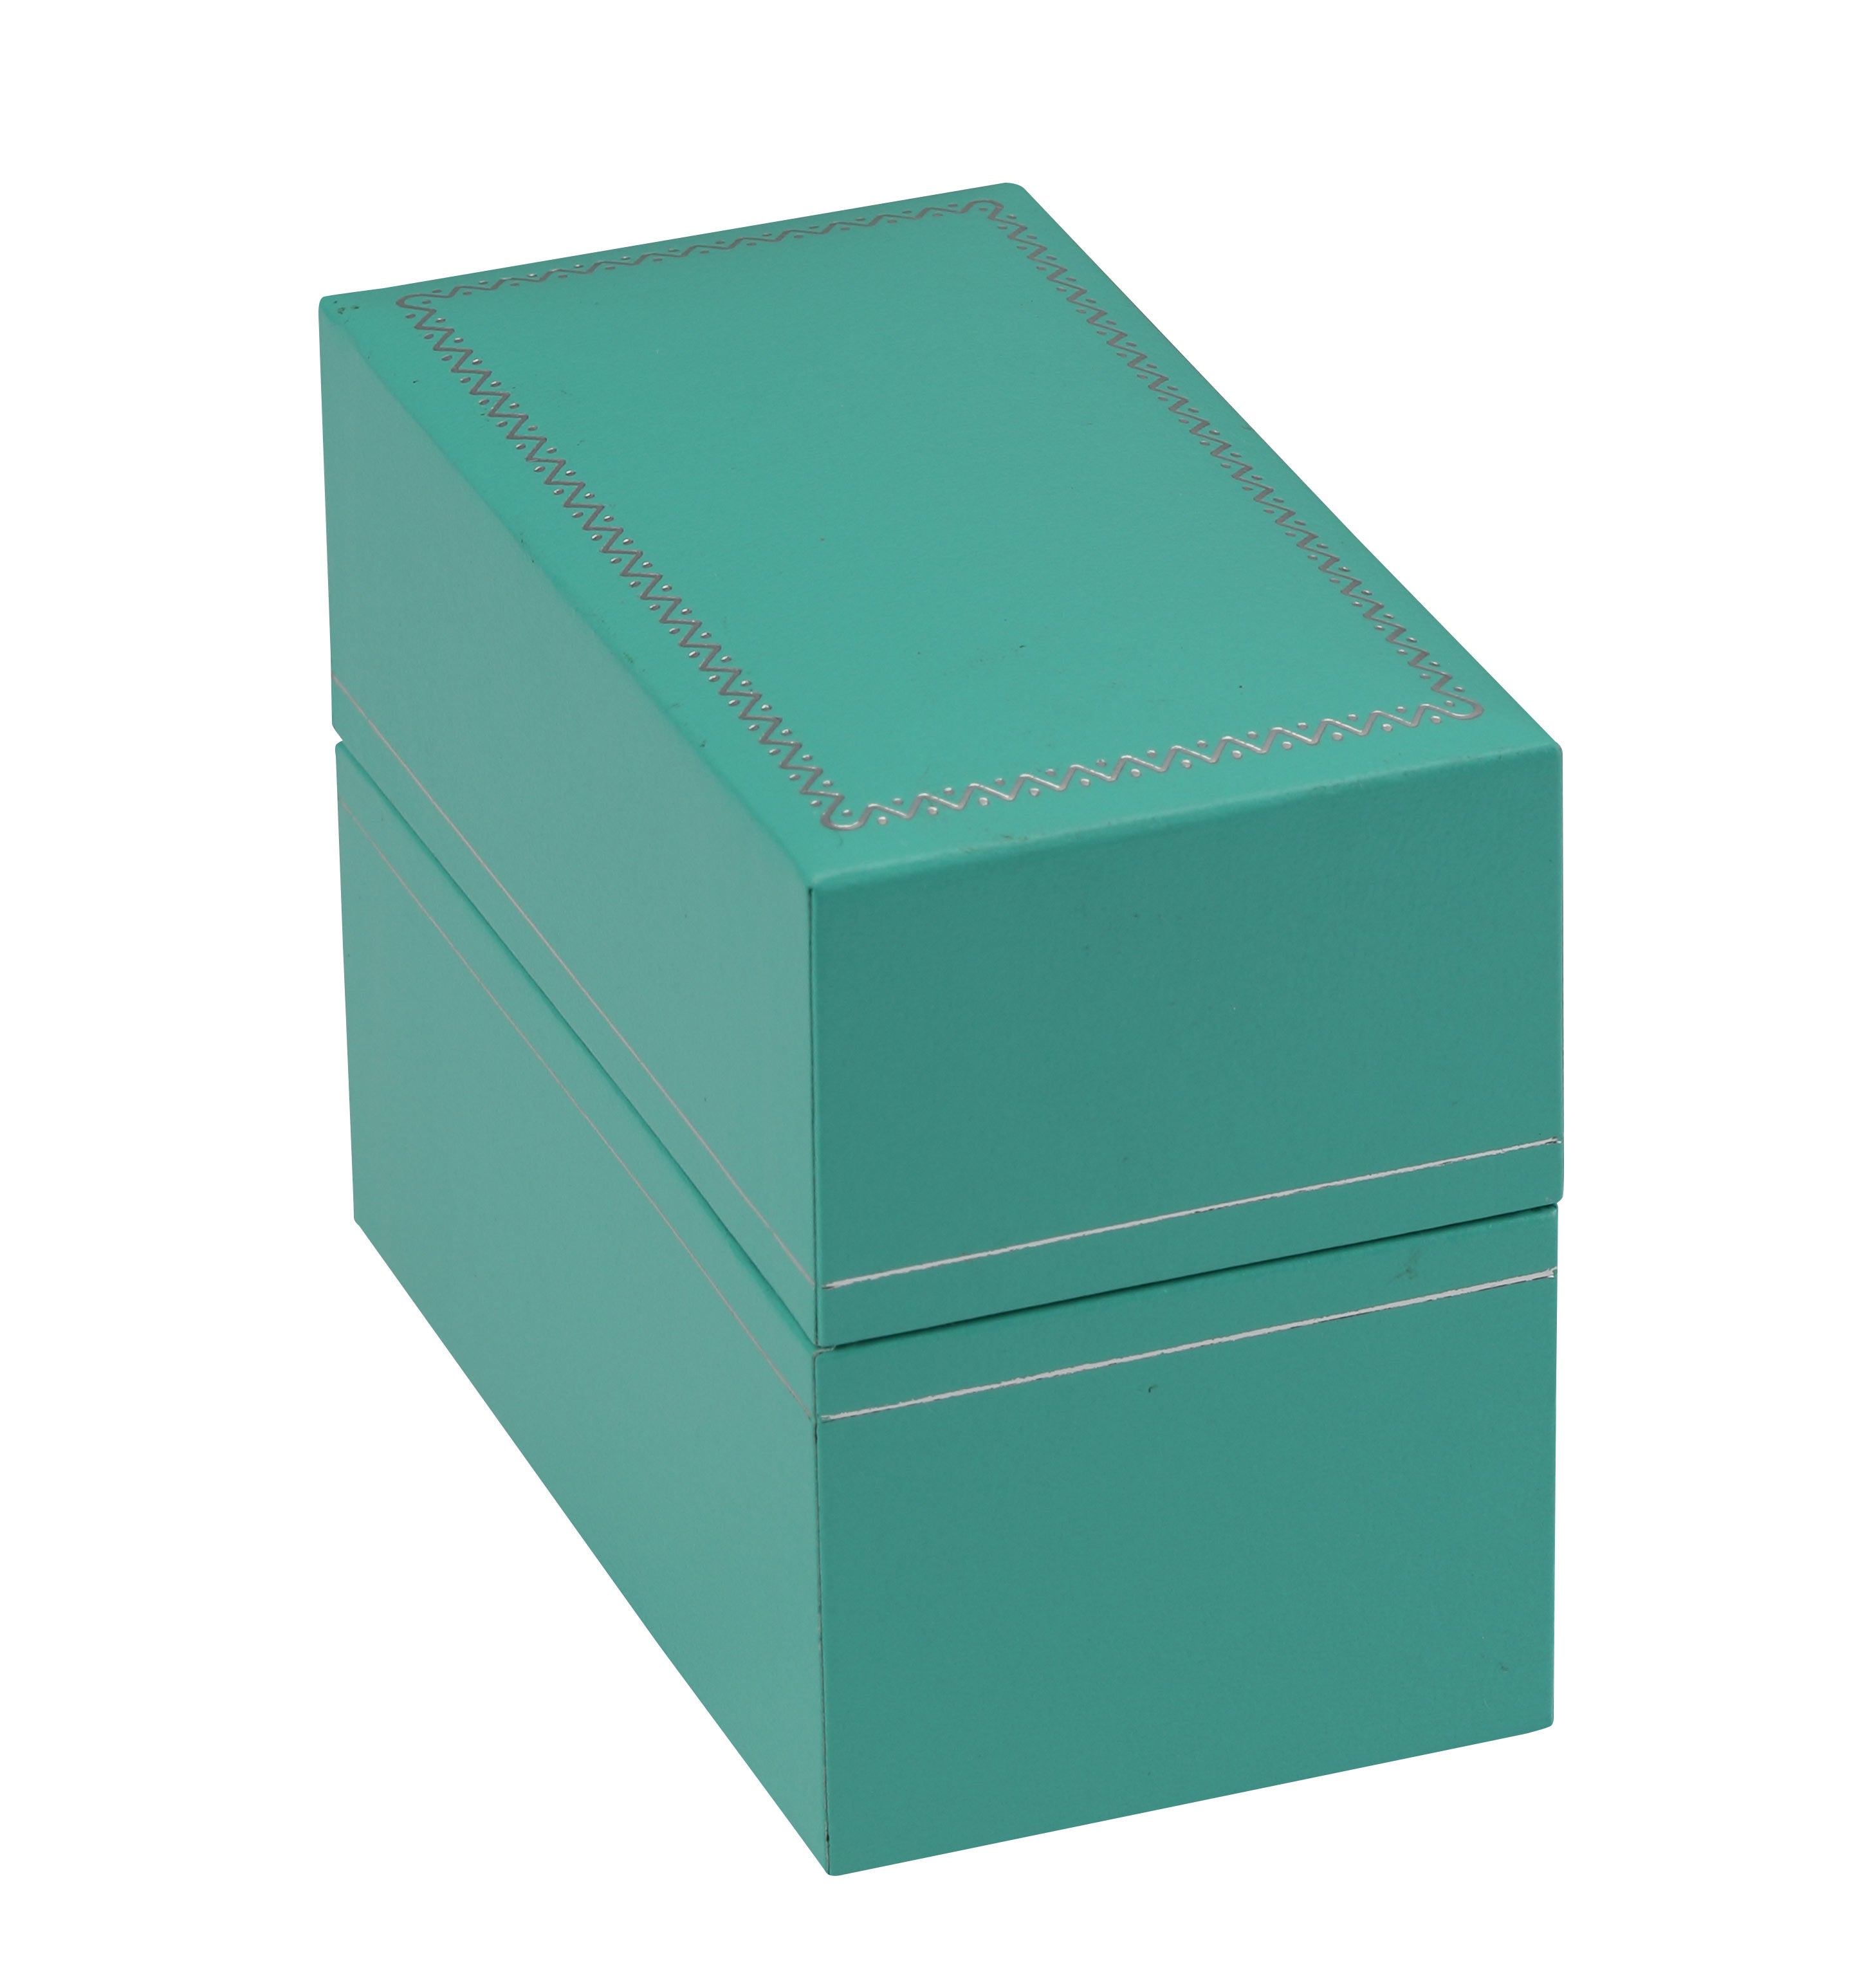 "Manhattan" Bangle/Watch Box in Turquoise/Silver Trim